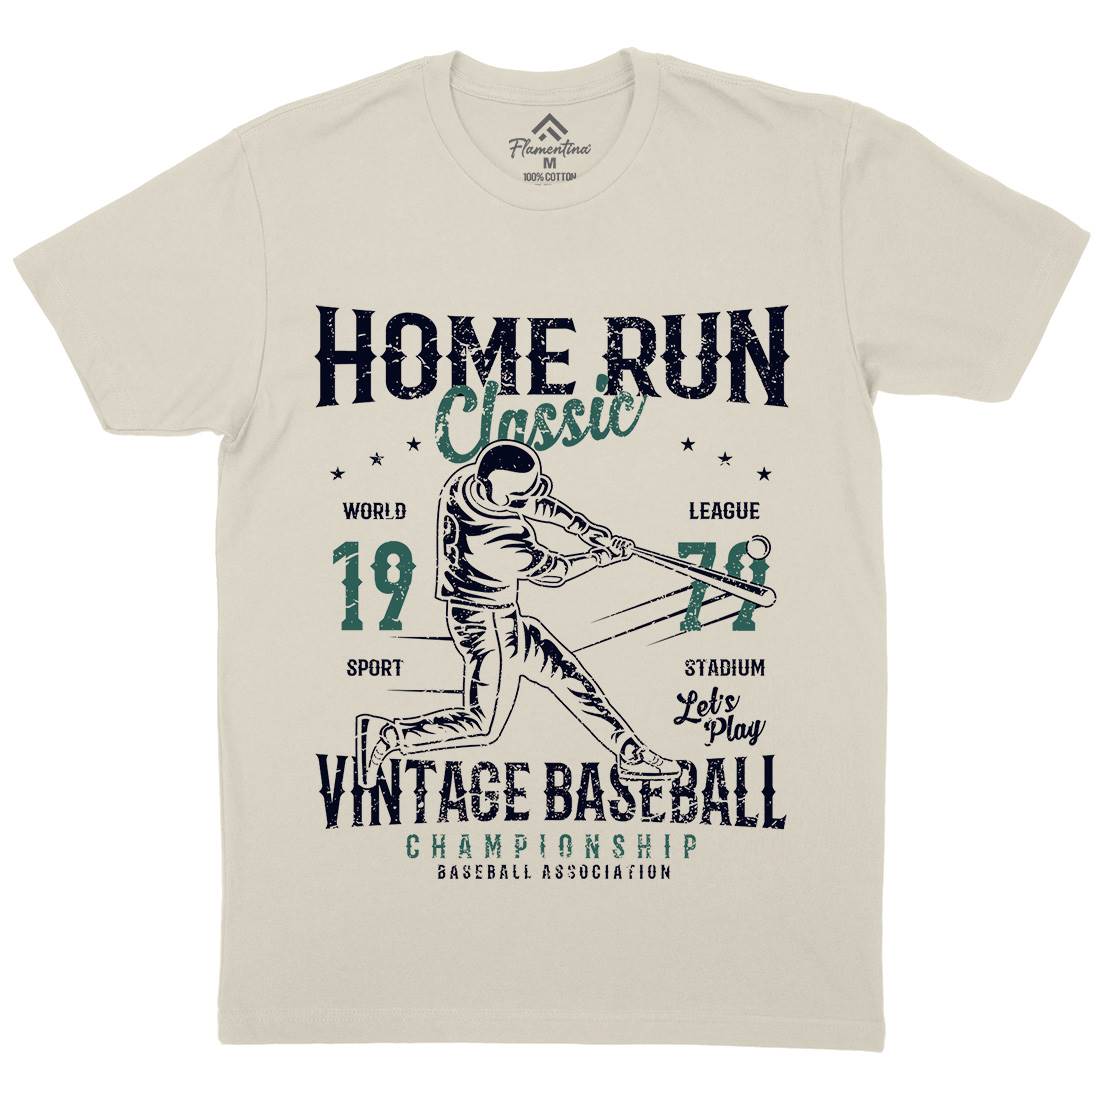 Home Run Classic Mens Organic Crew Neck T-Shirt Sport A065